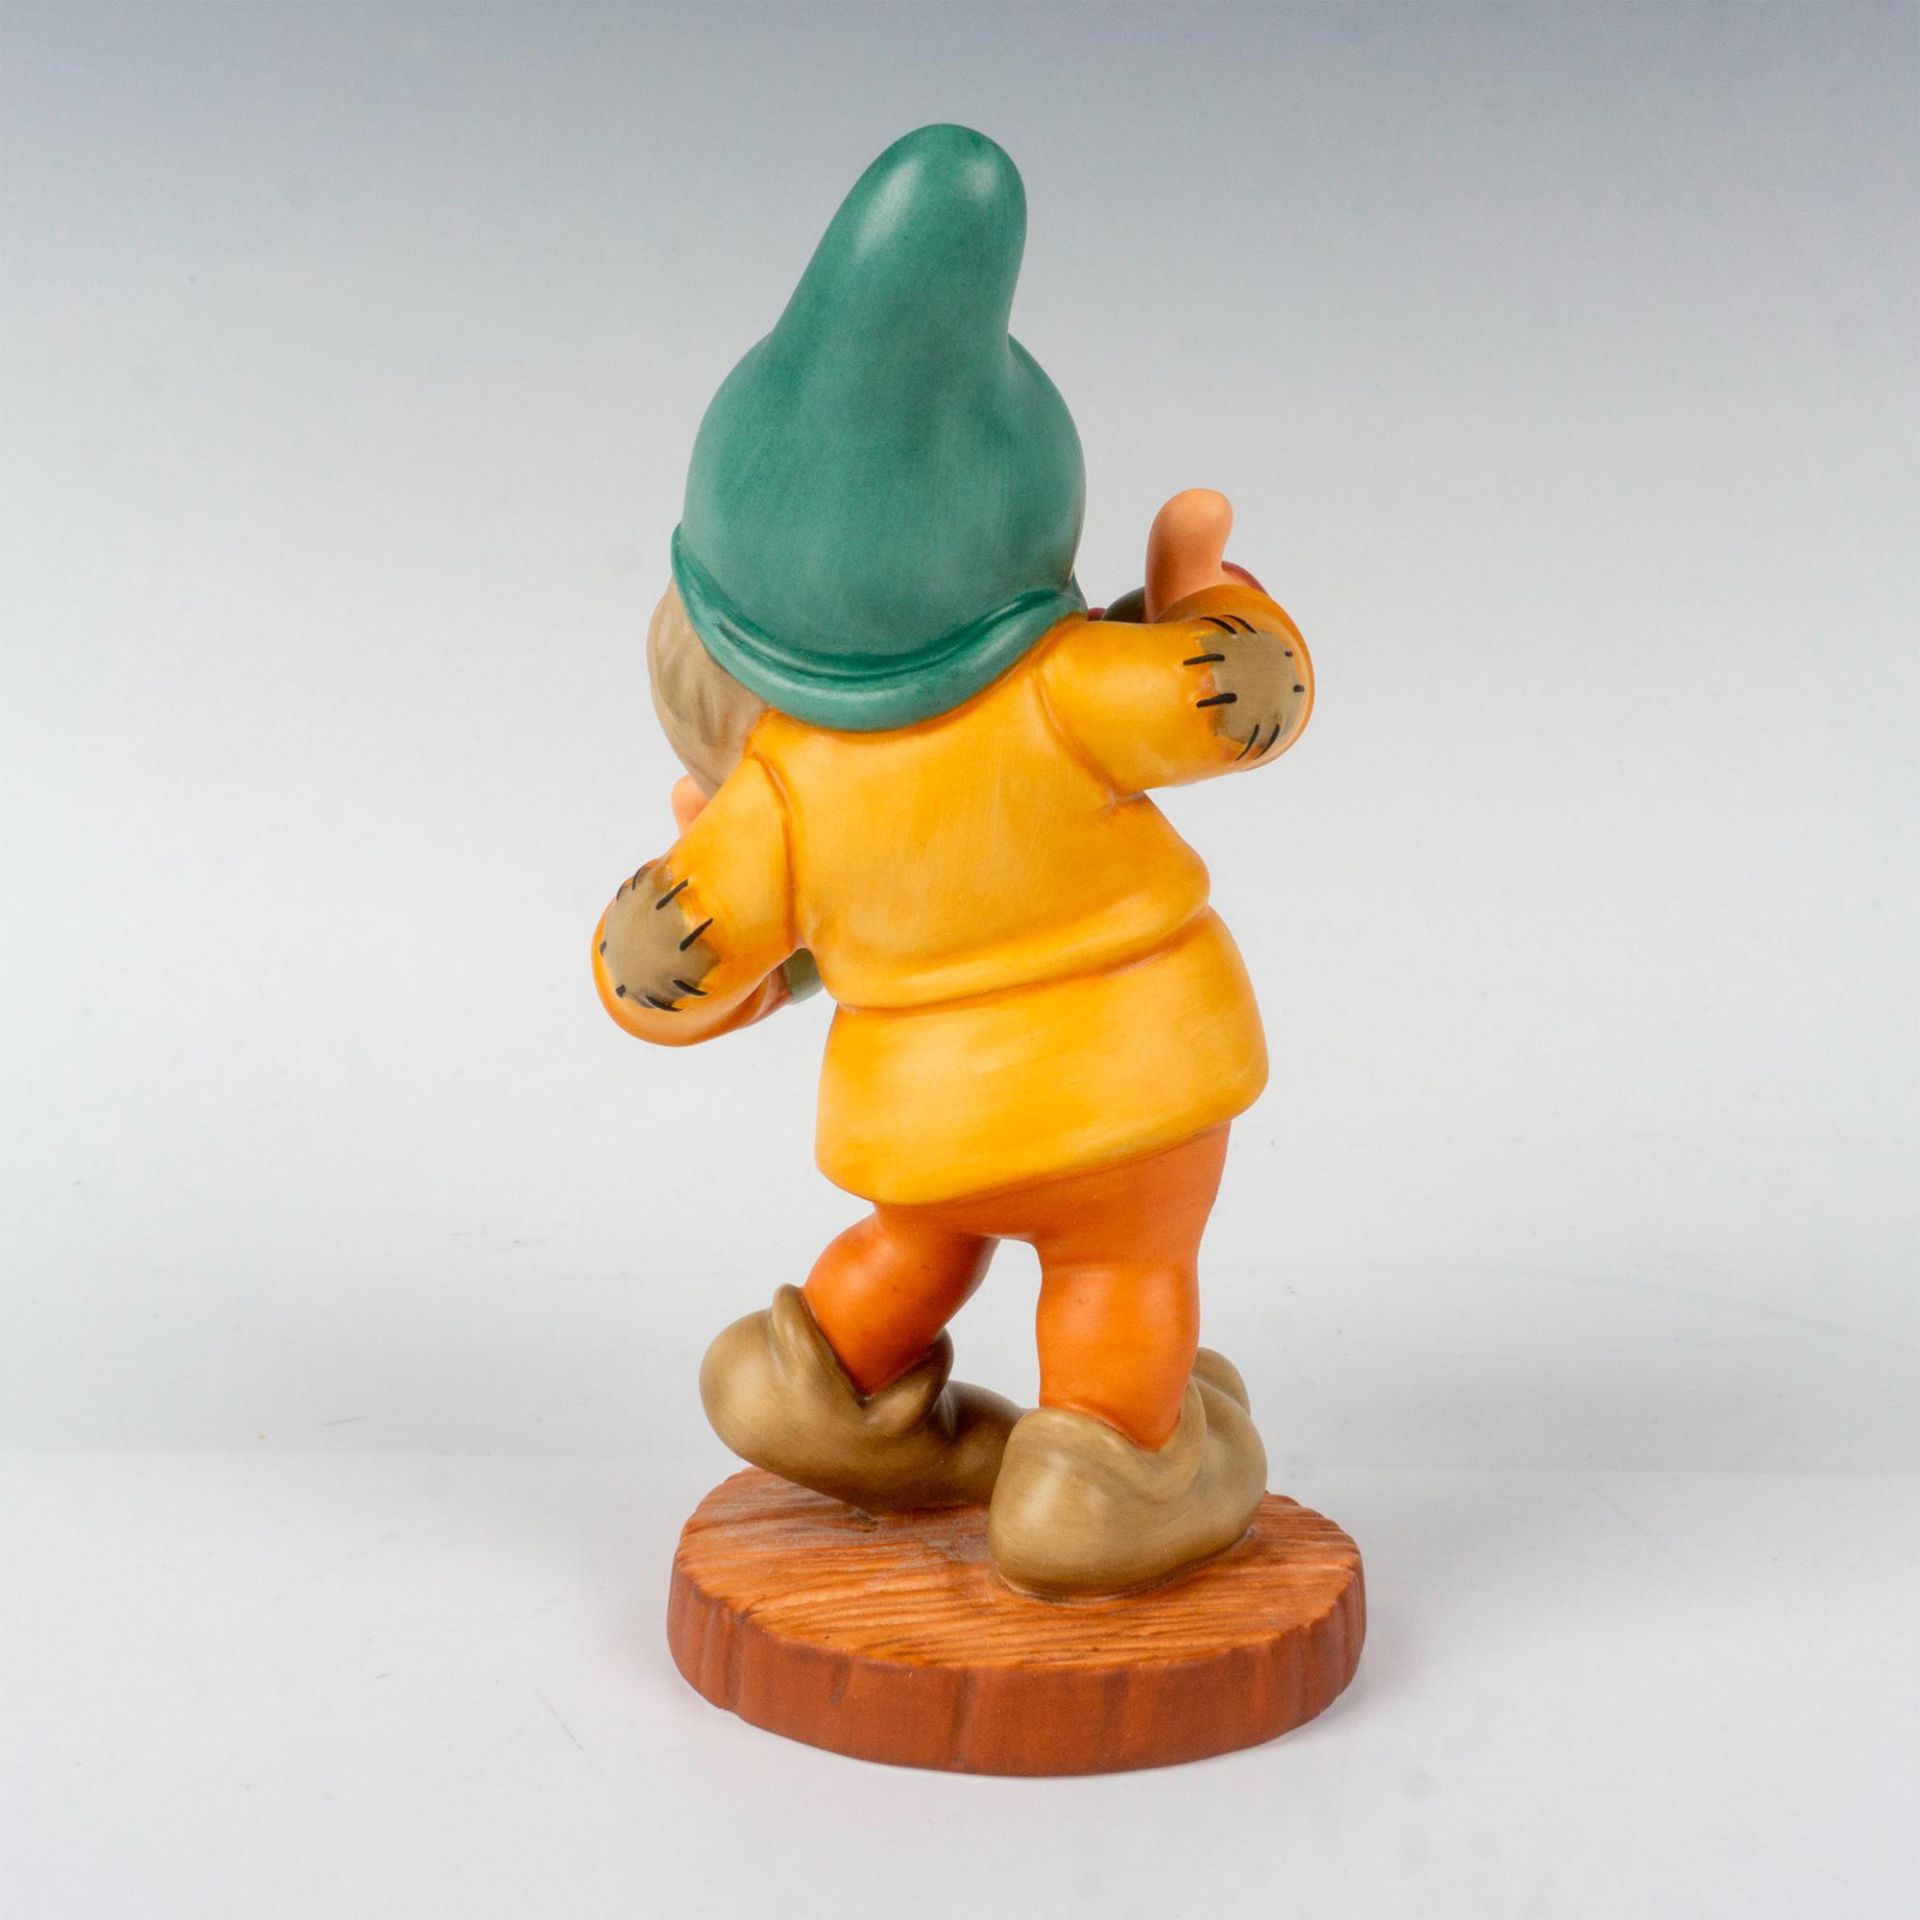 Walt Disney Classics Collection Figurine, Bashful - Image 2 of 4